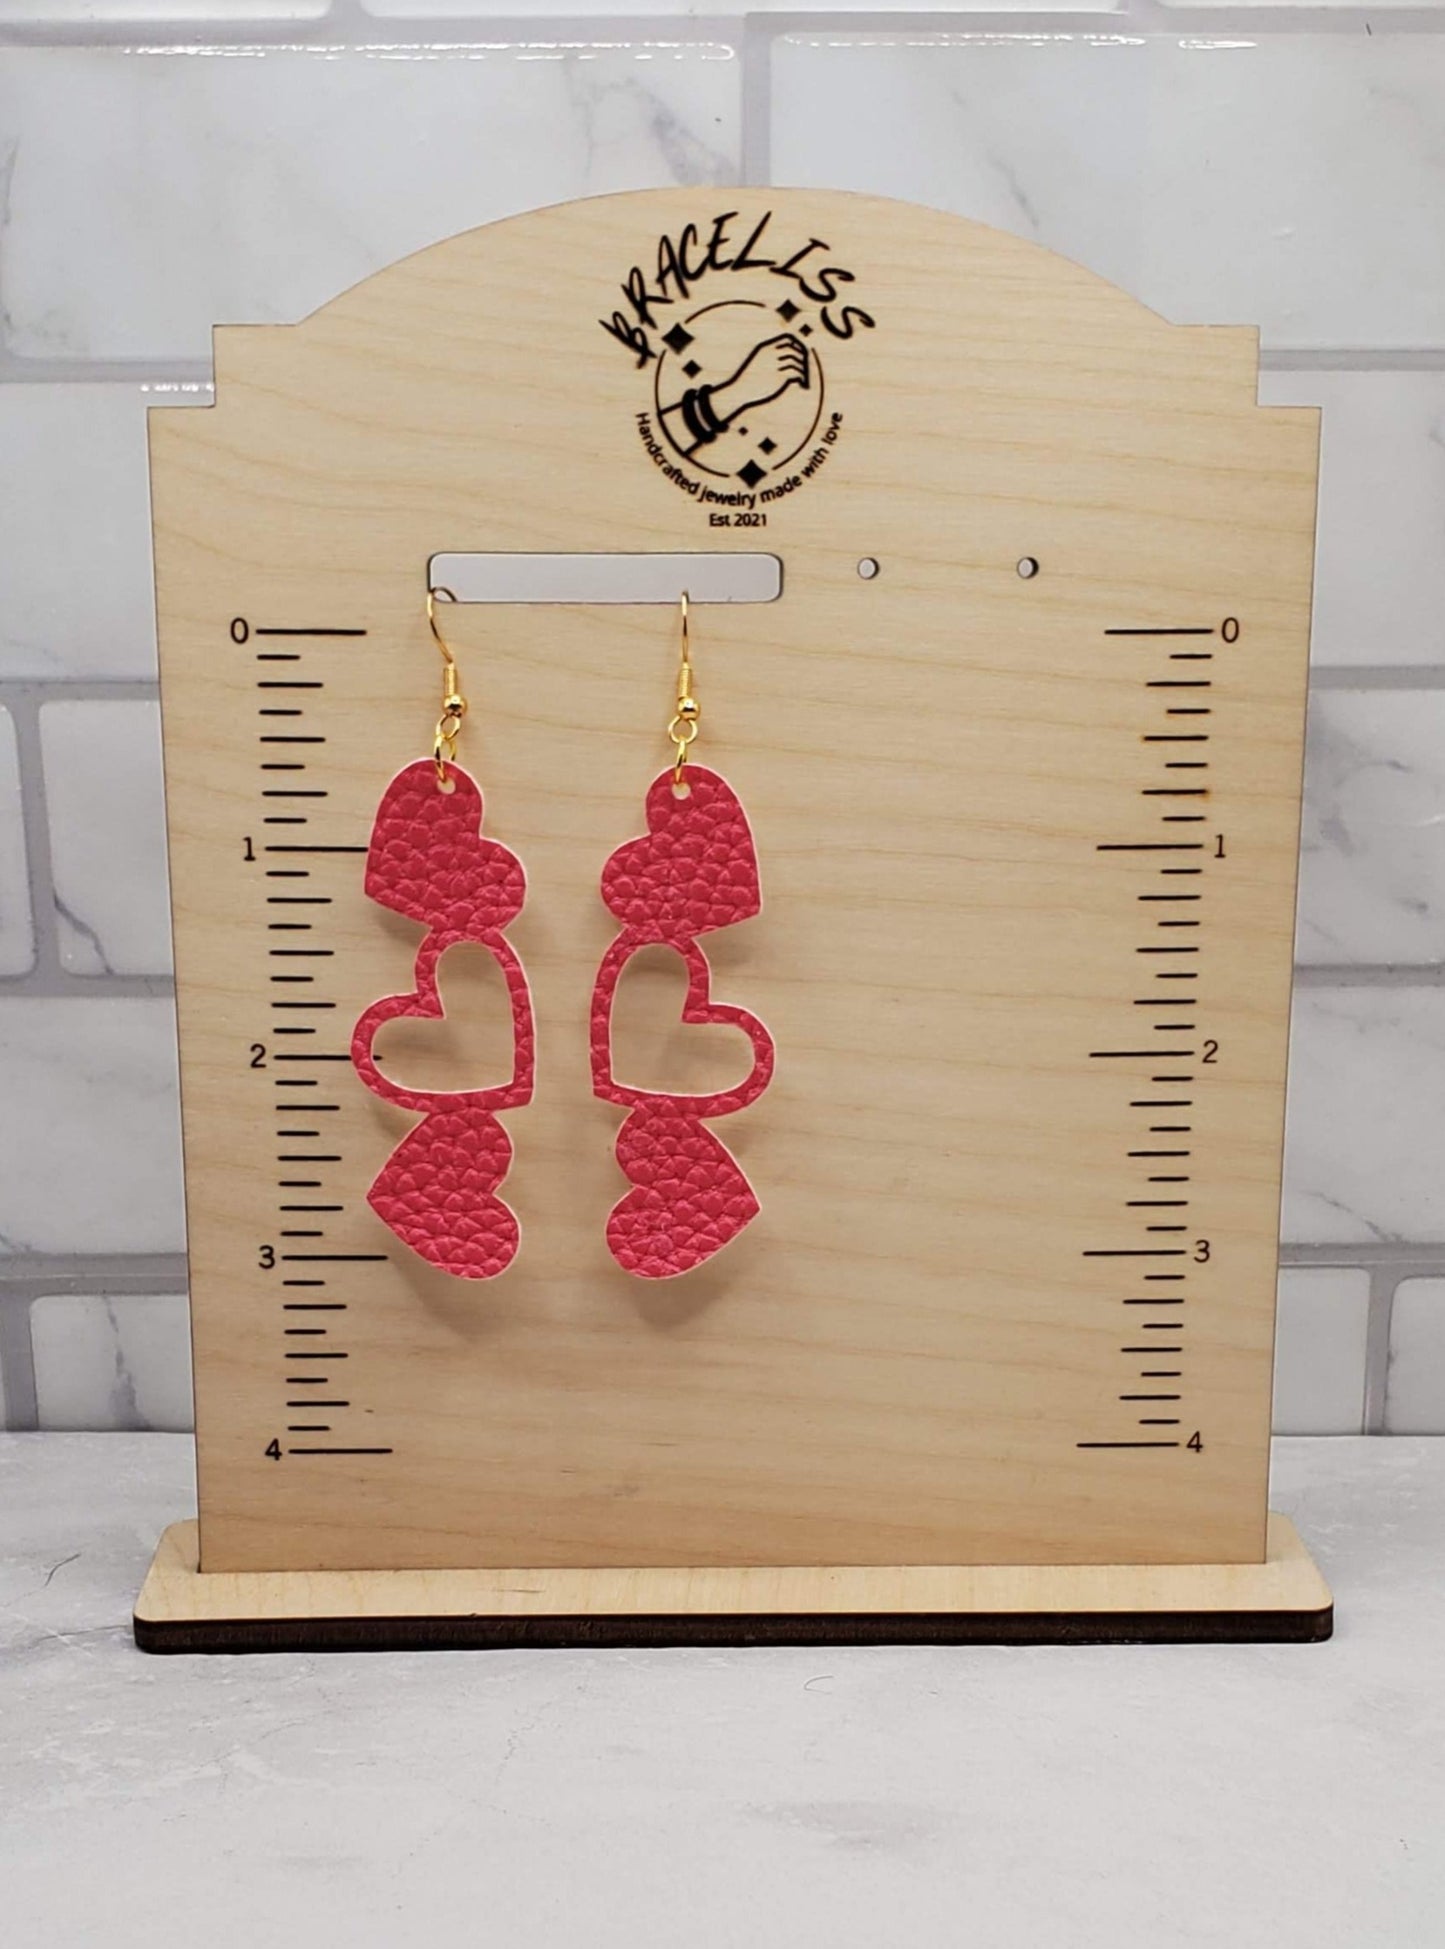 stacked heart earrings - dark pink faux leather drop earrings on measuring display - braceliss